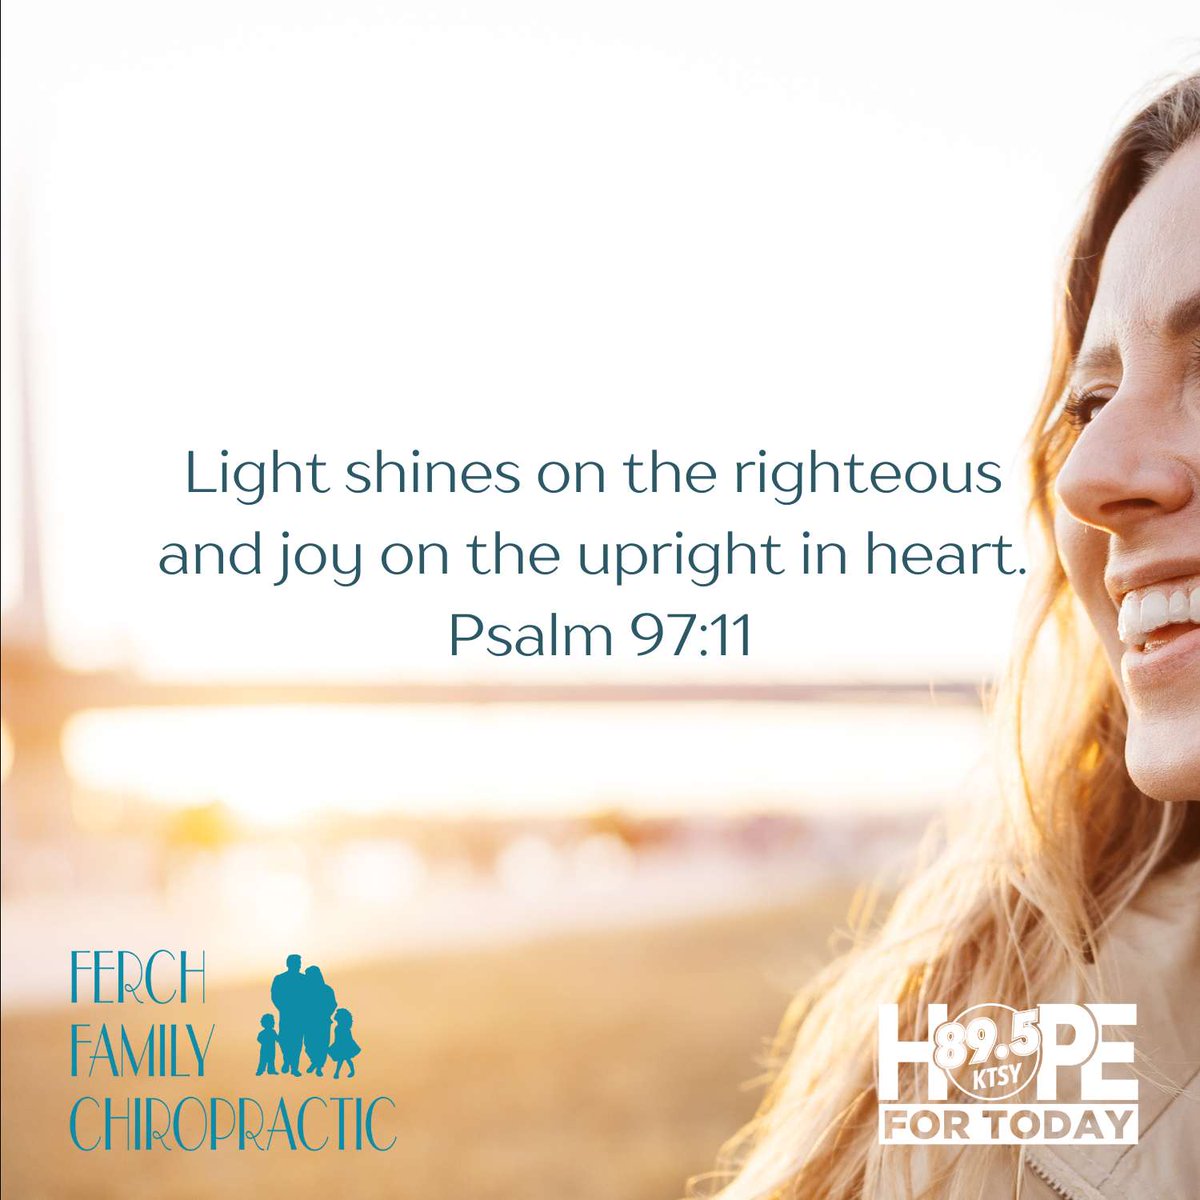 We have joy because of Jesus. #hopefortoday #choosehope #bible #scripture